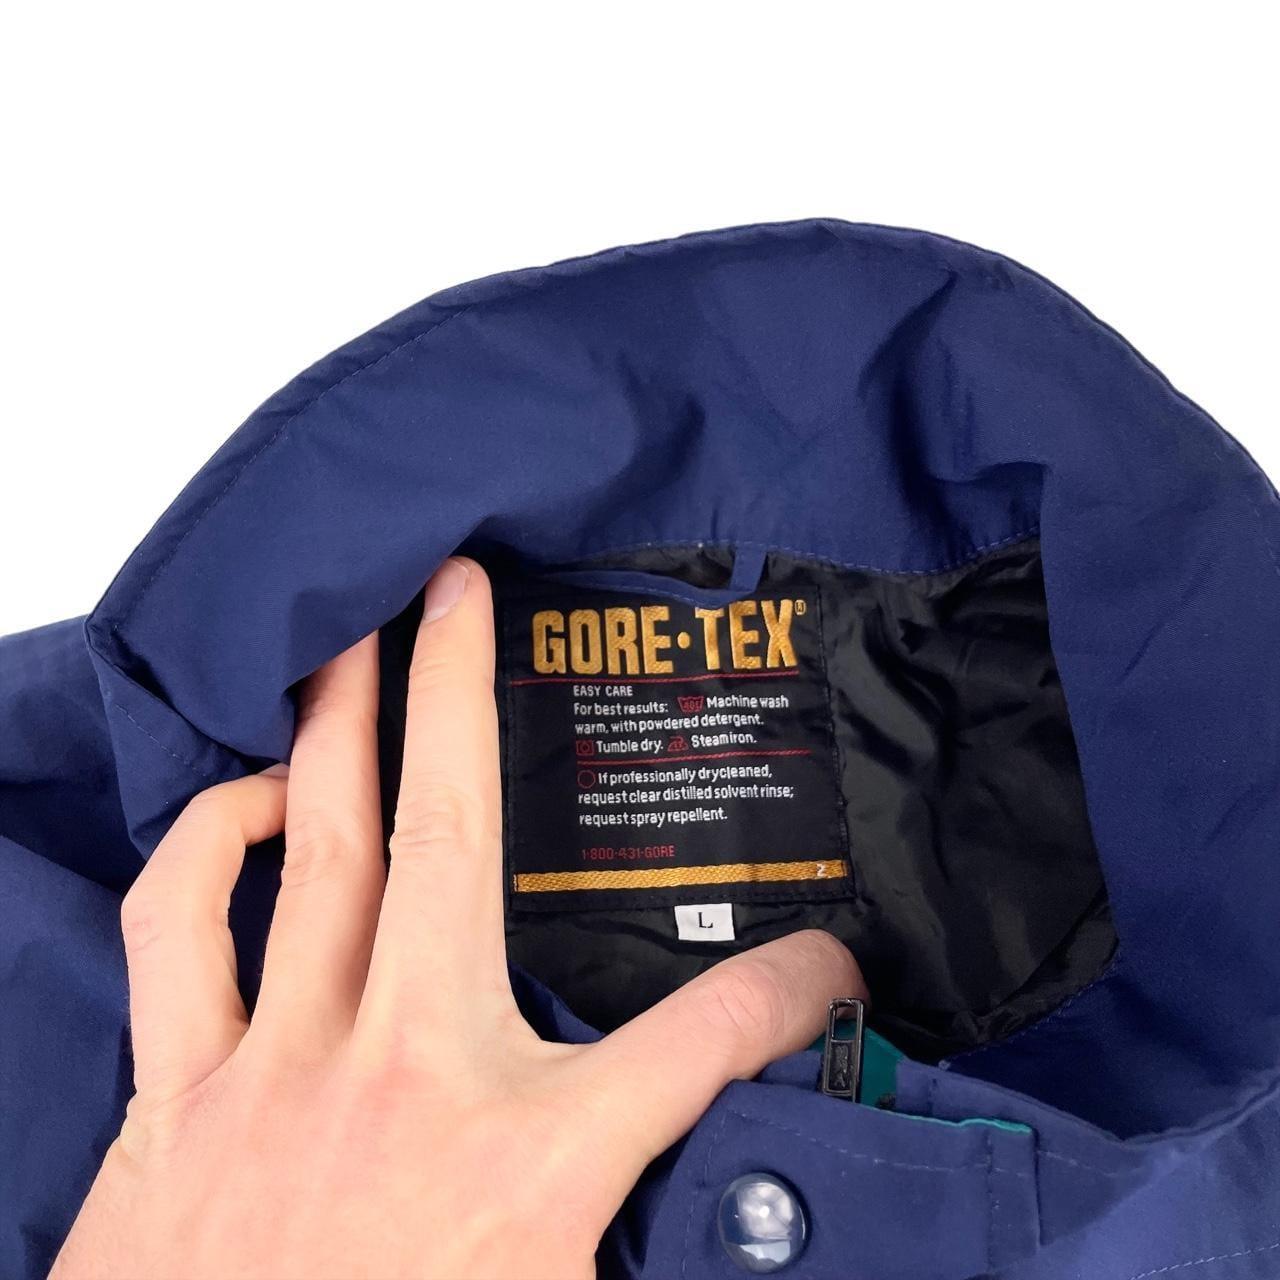 Vintage Goretex brand waterproof jacket size L - Known Source